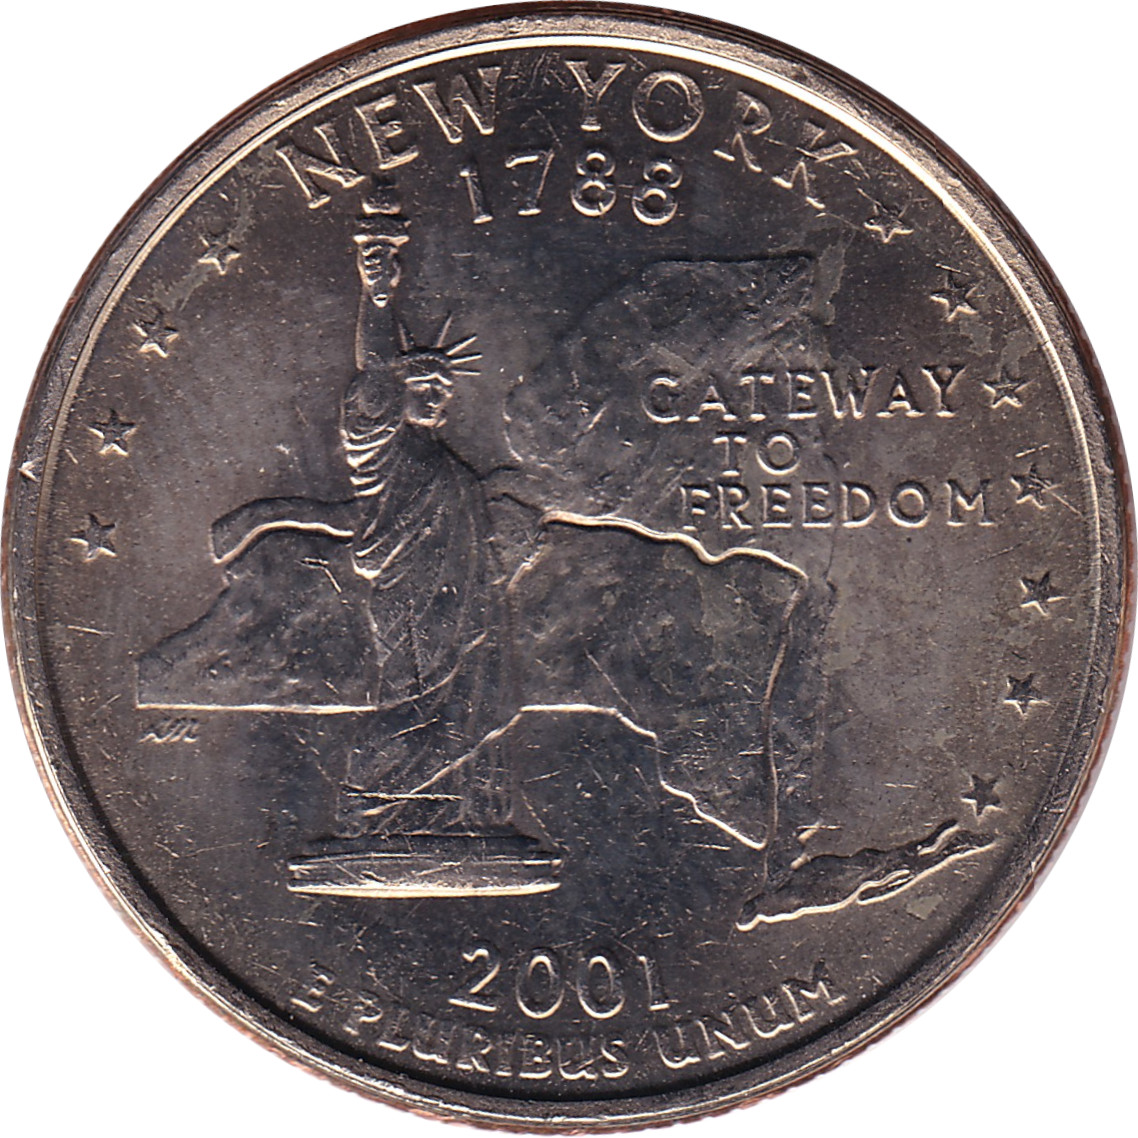 1/4 dollar - New York